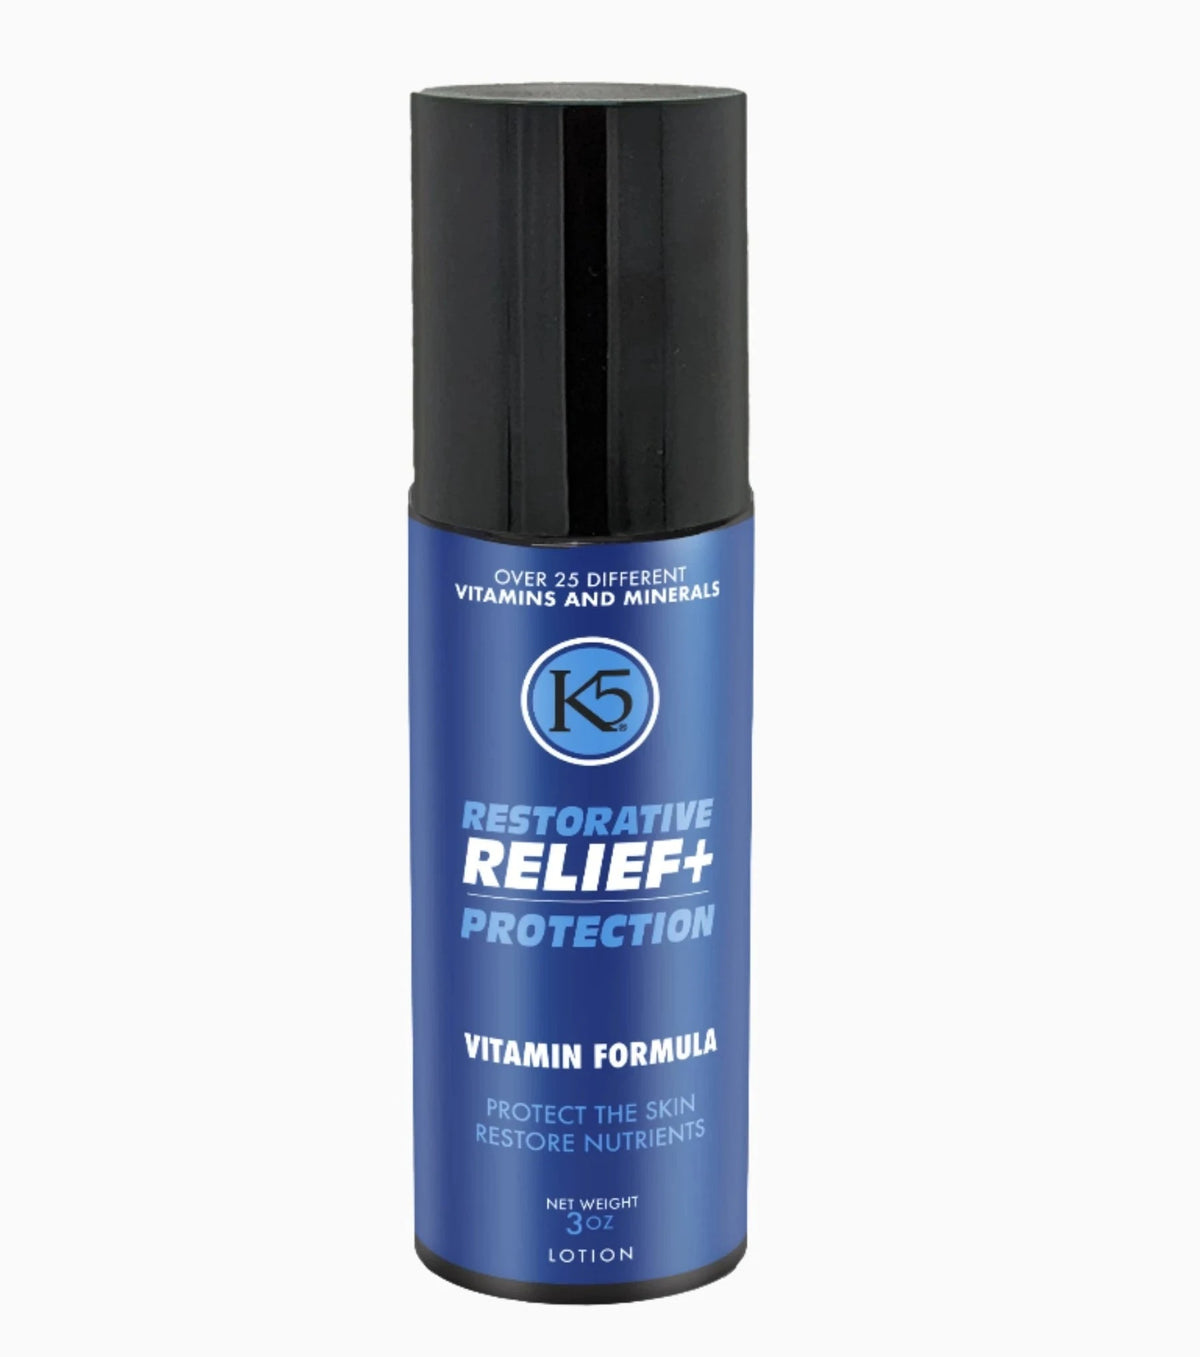 K5 Restorative Relief + Protection | 3oz lotion